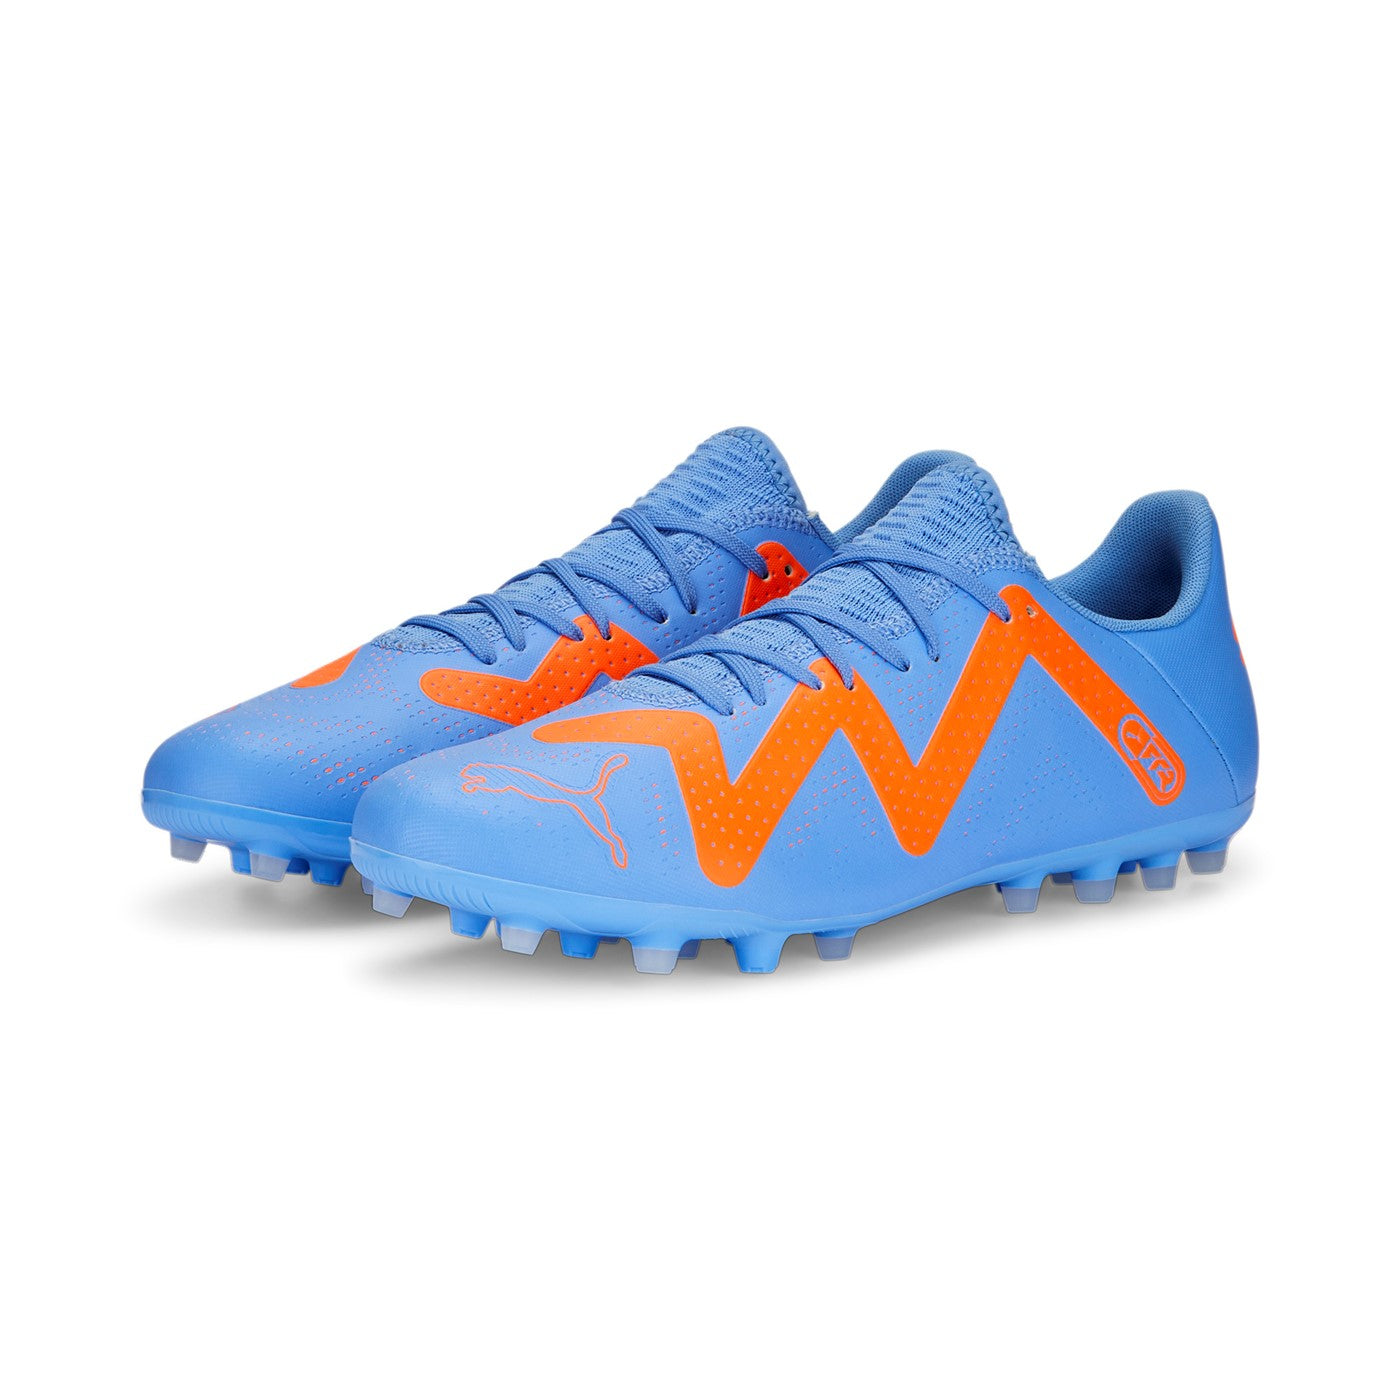 Puma scarpa da calcio da uomo Future Play MG 107190 01 blu bianco arancio